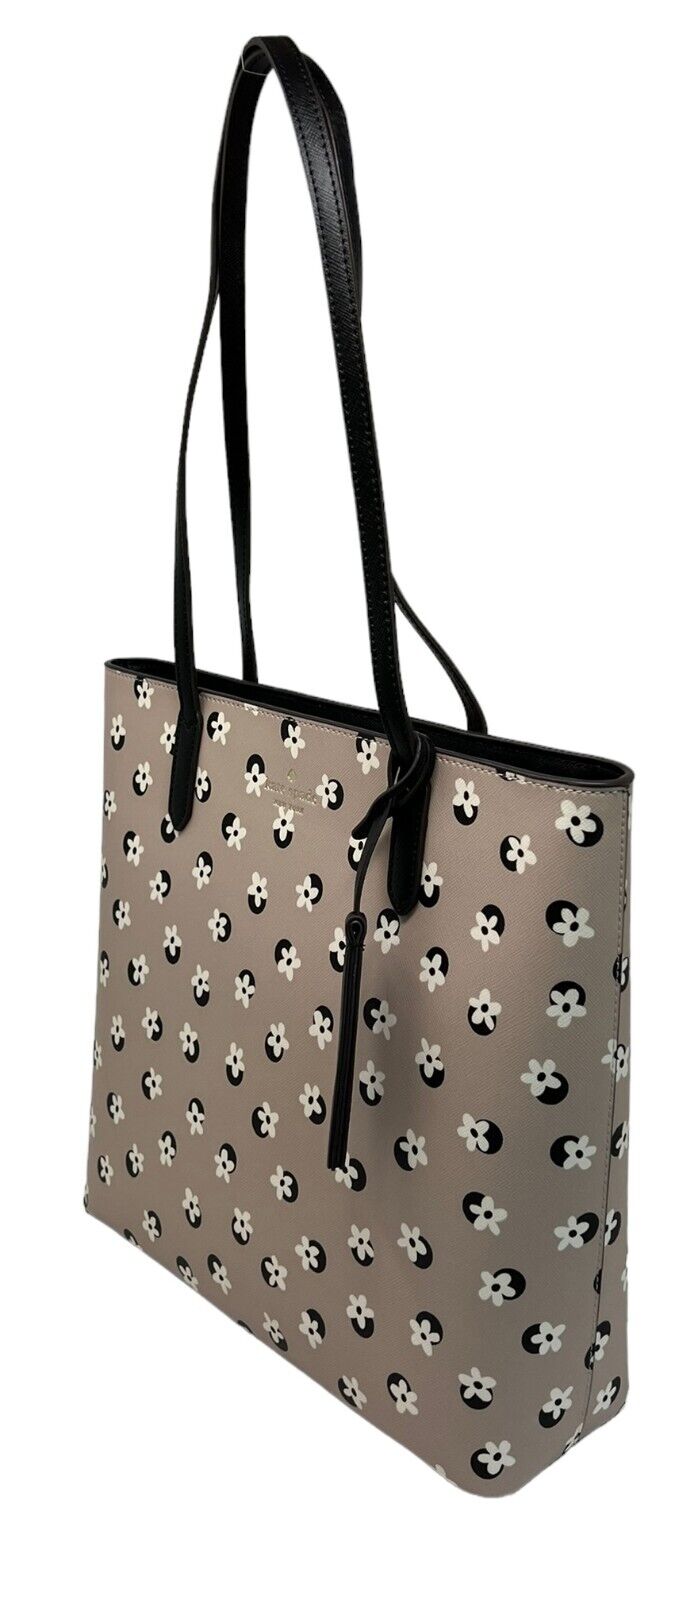 Kate Spade Jana Tote Floral Dot Print Saffiano Leather Handbag K8149 $359